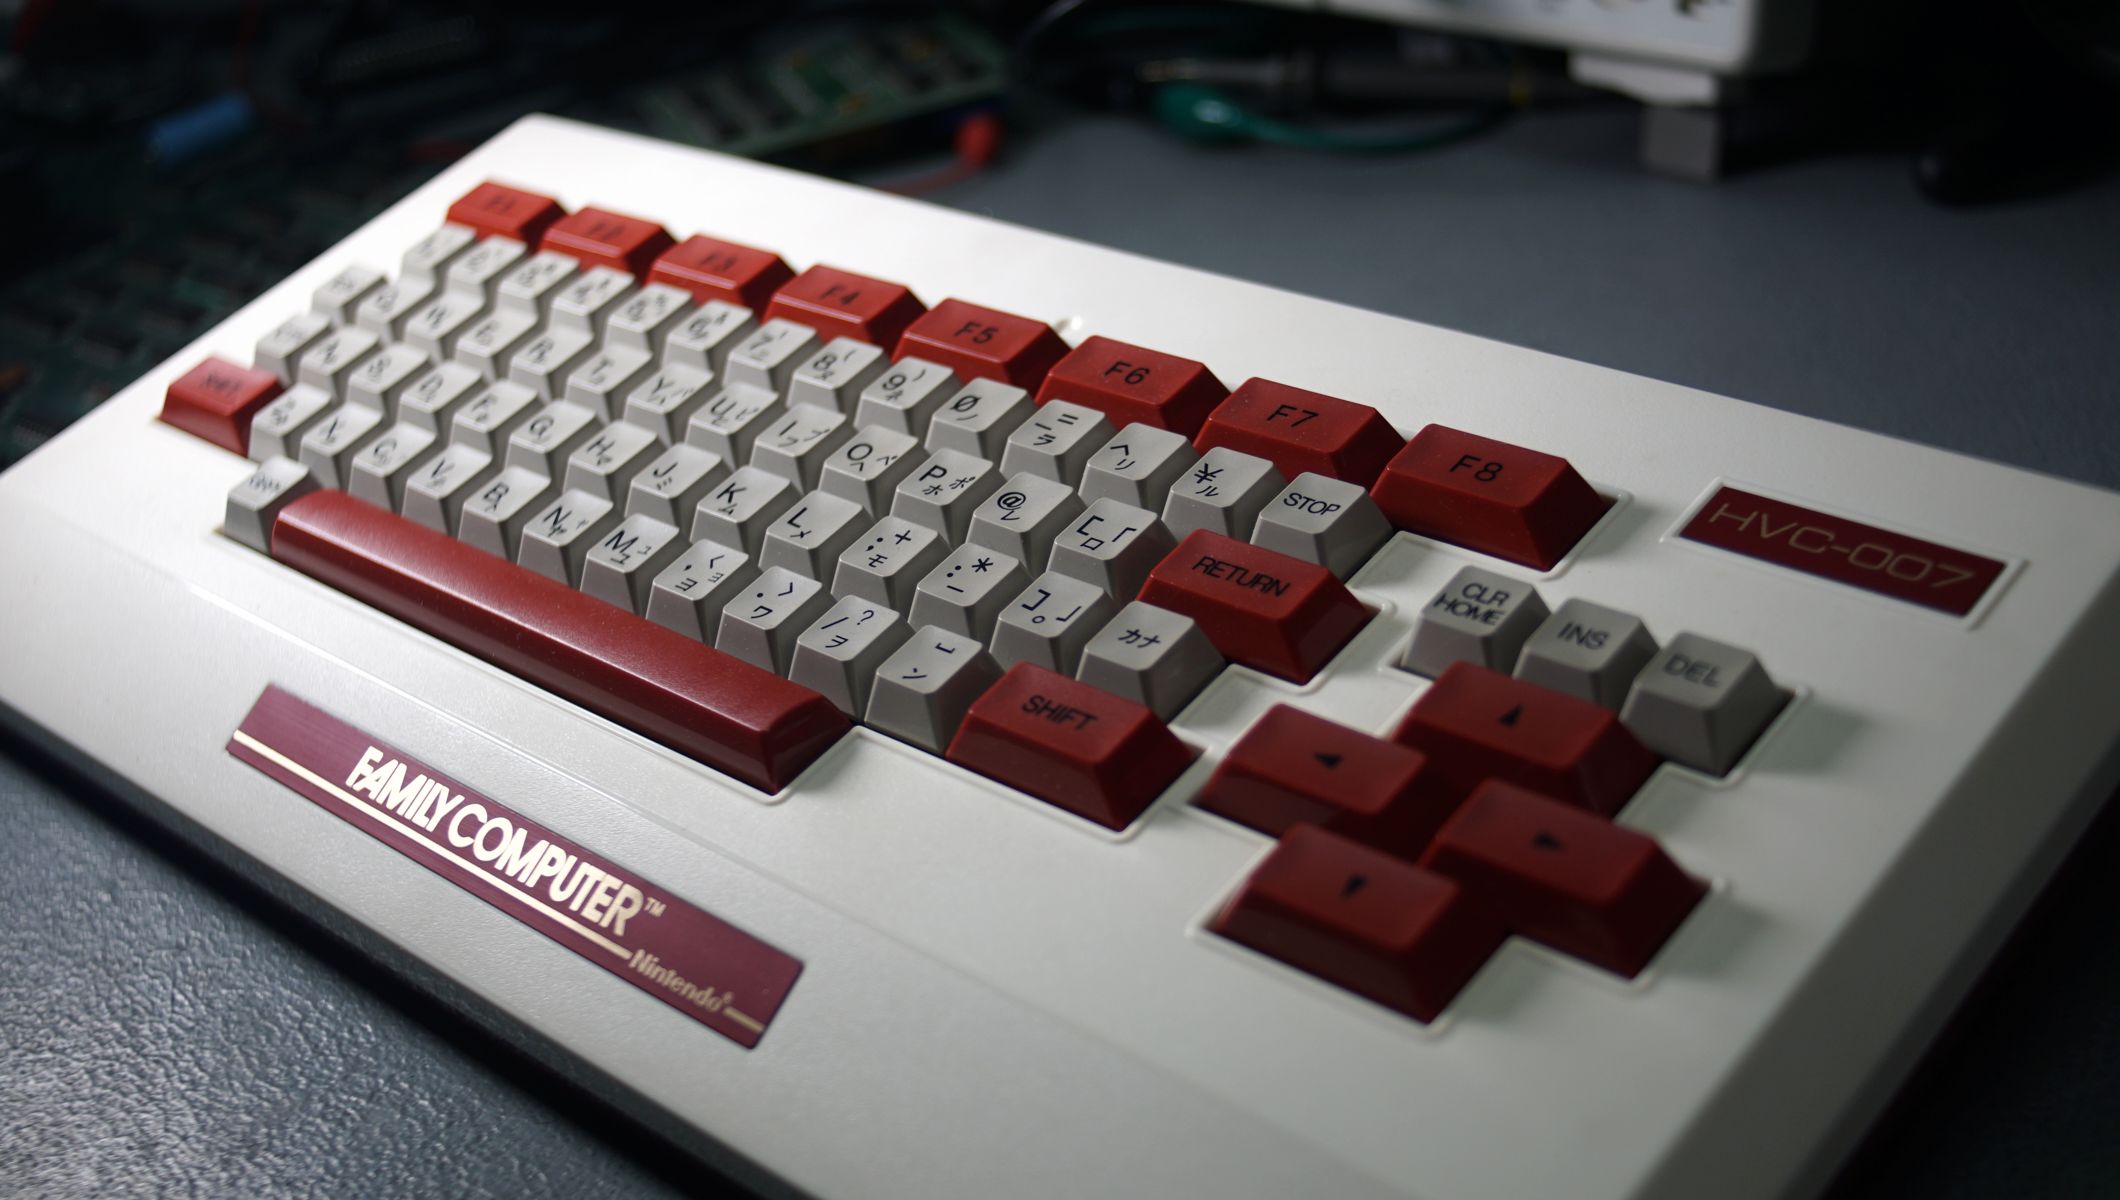 Famicom Keyboard